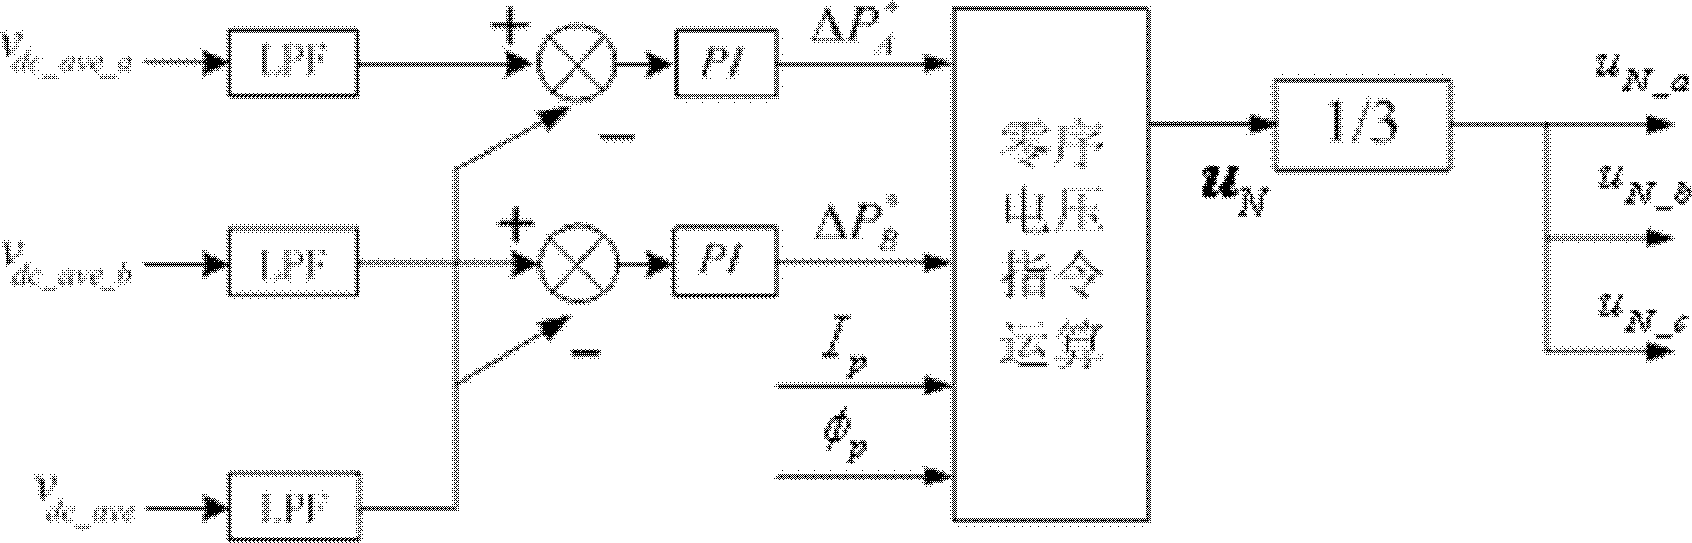 Zero-sequence-voltage-based current conversion chain average DC voltage control method